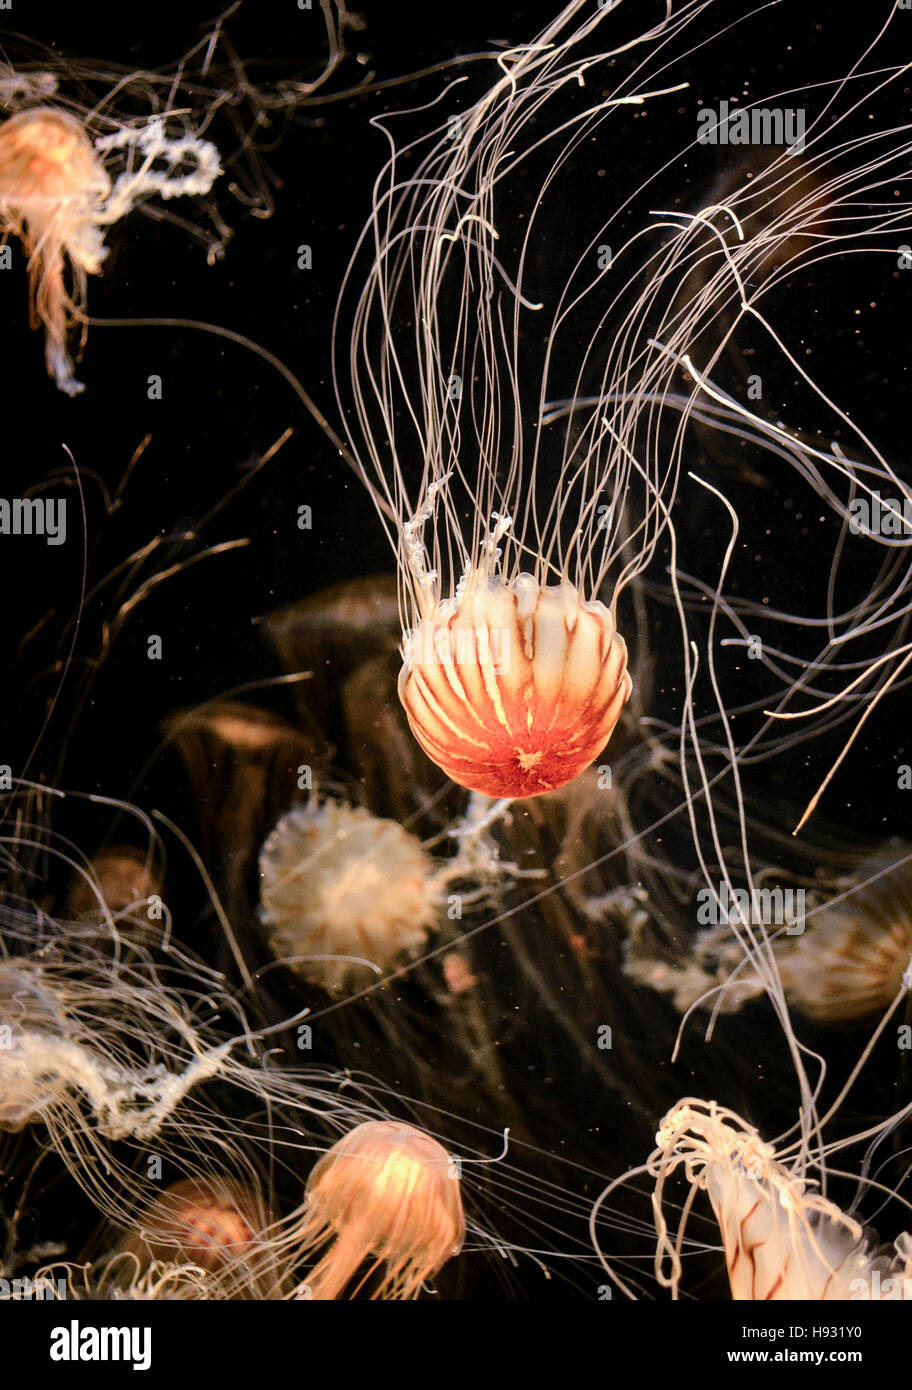 Lion's mane or hair jellyfish in aquarium against dark background Stock Photo